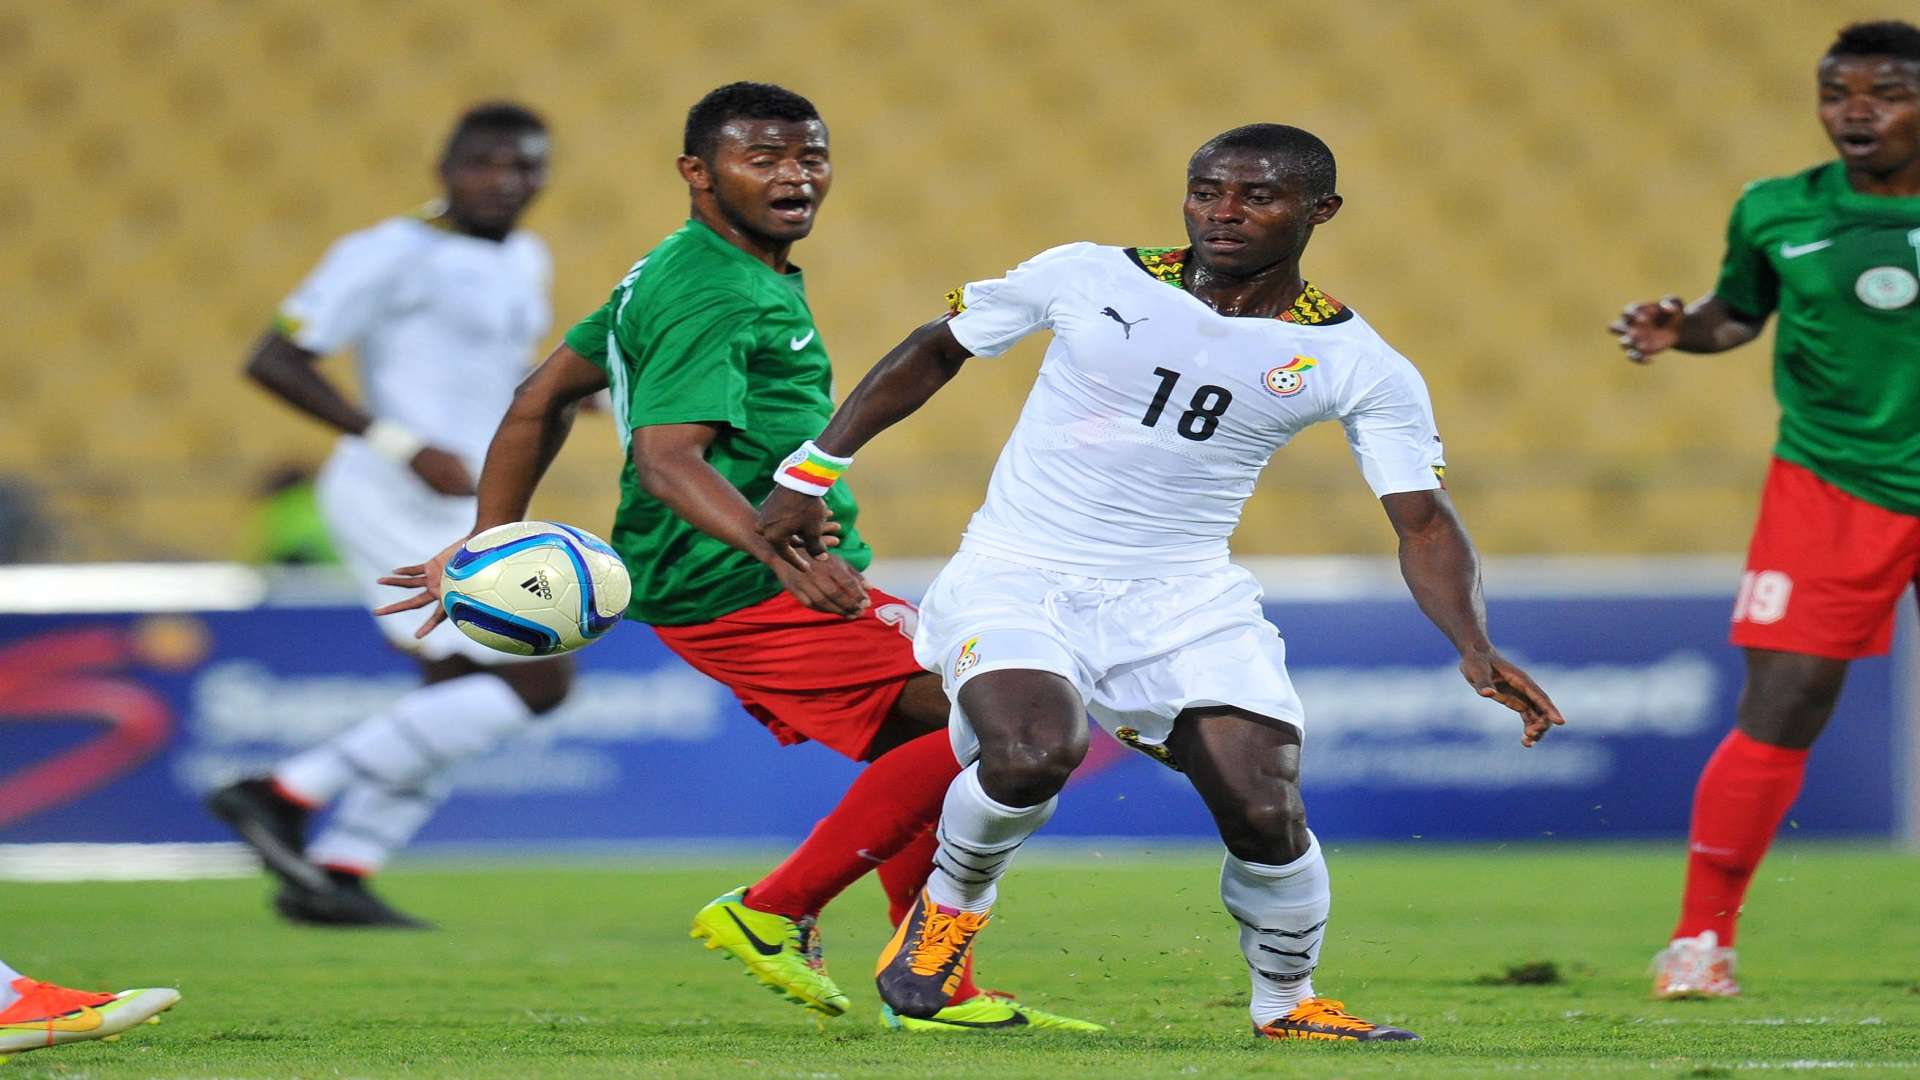 Adams Ahmed of Ghana challenged by Rihno Michel of Madagascar Cosafa Cup 25 May 2015